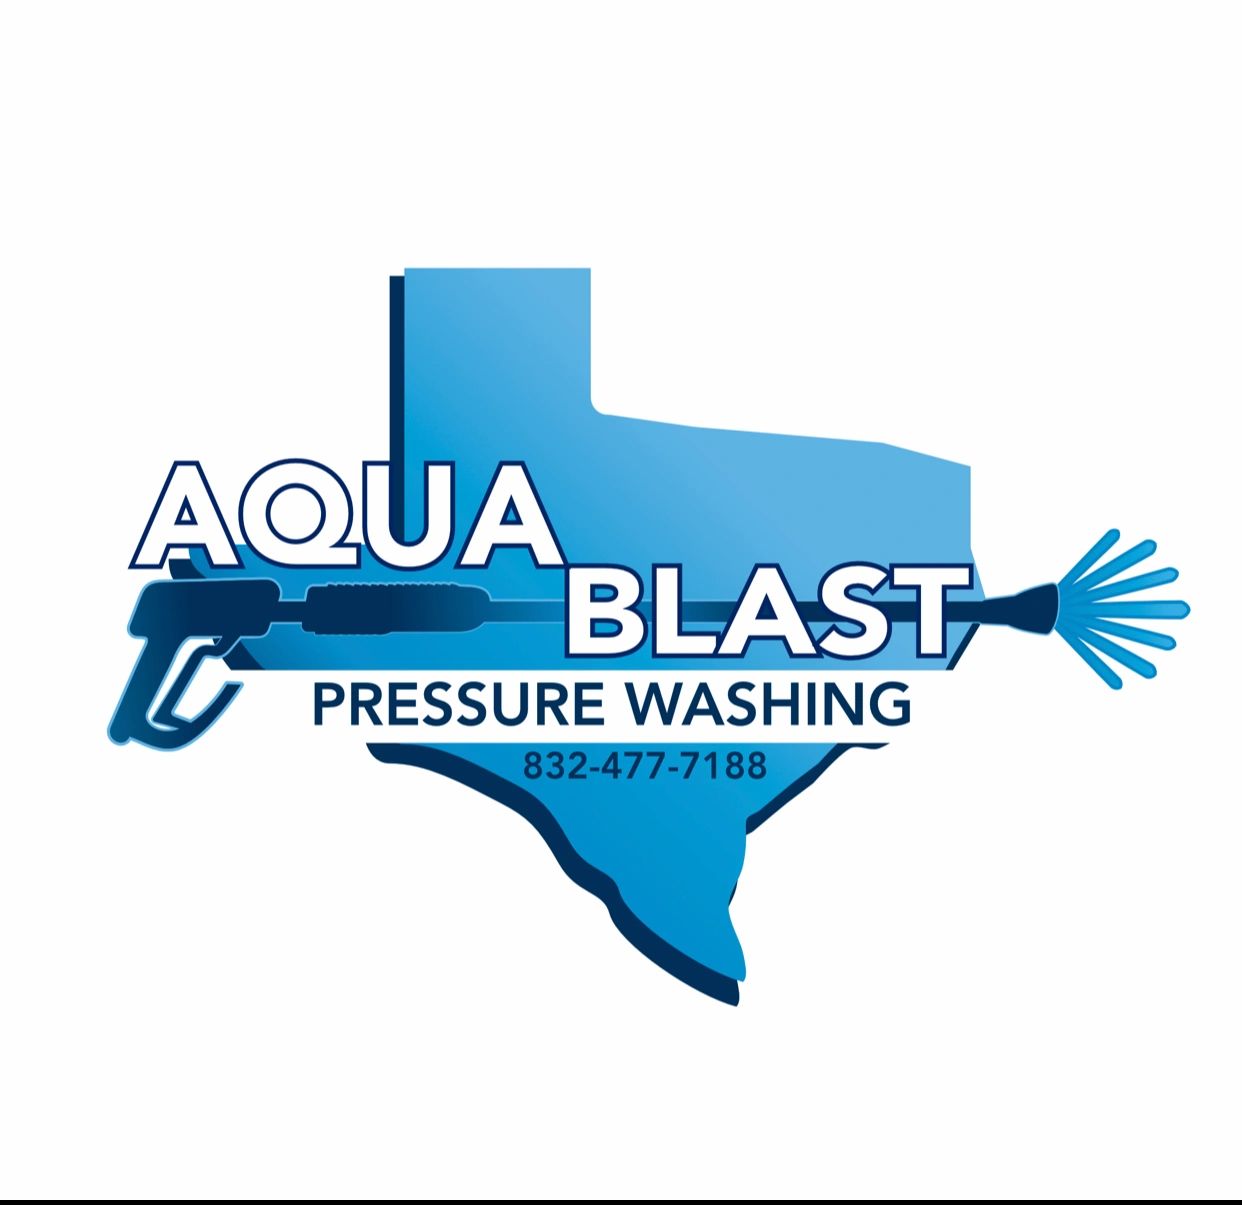 Pressure Washing - Aqua Blast